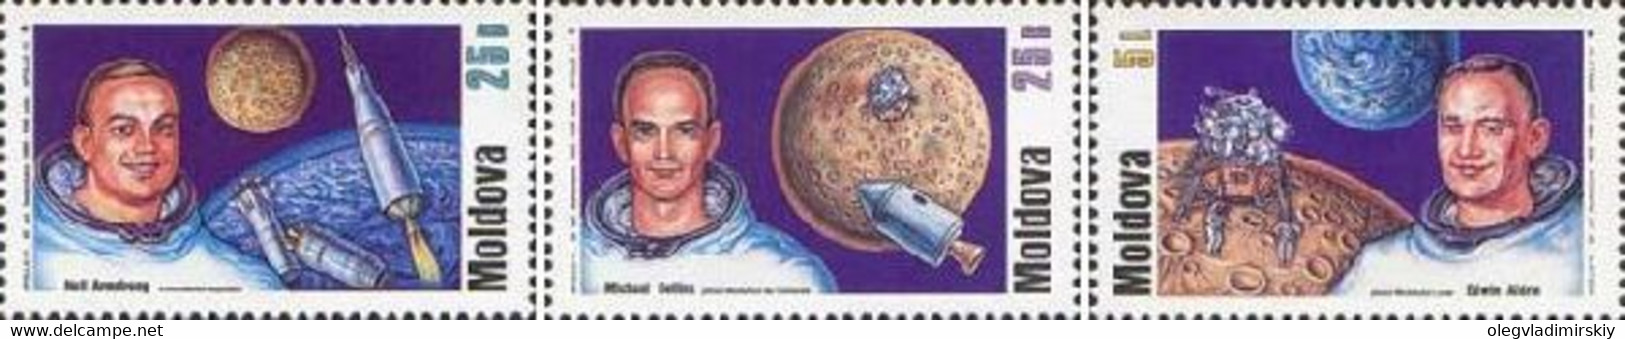 Moldavia Moldova 1999 30th Of The Moon Landing Set Of 3 Stamps - Estados Unidos